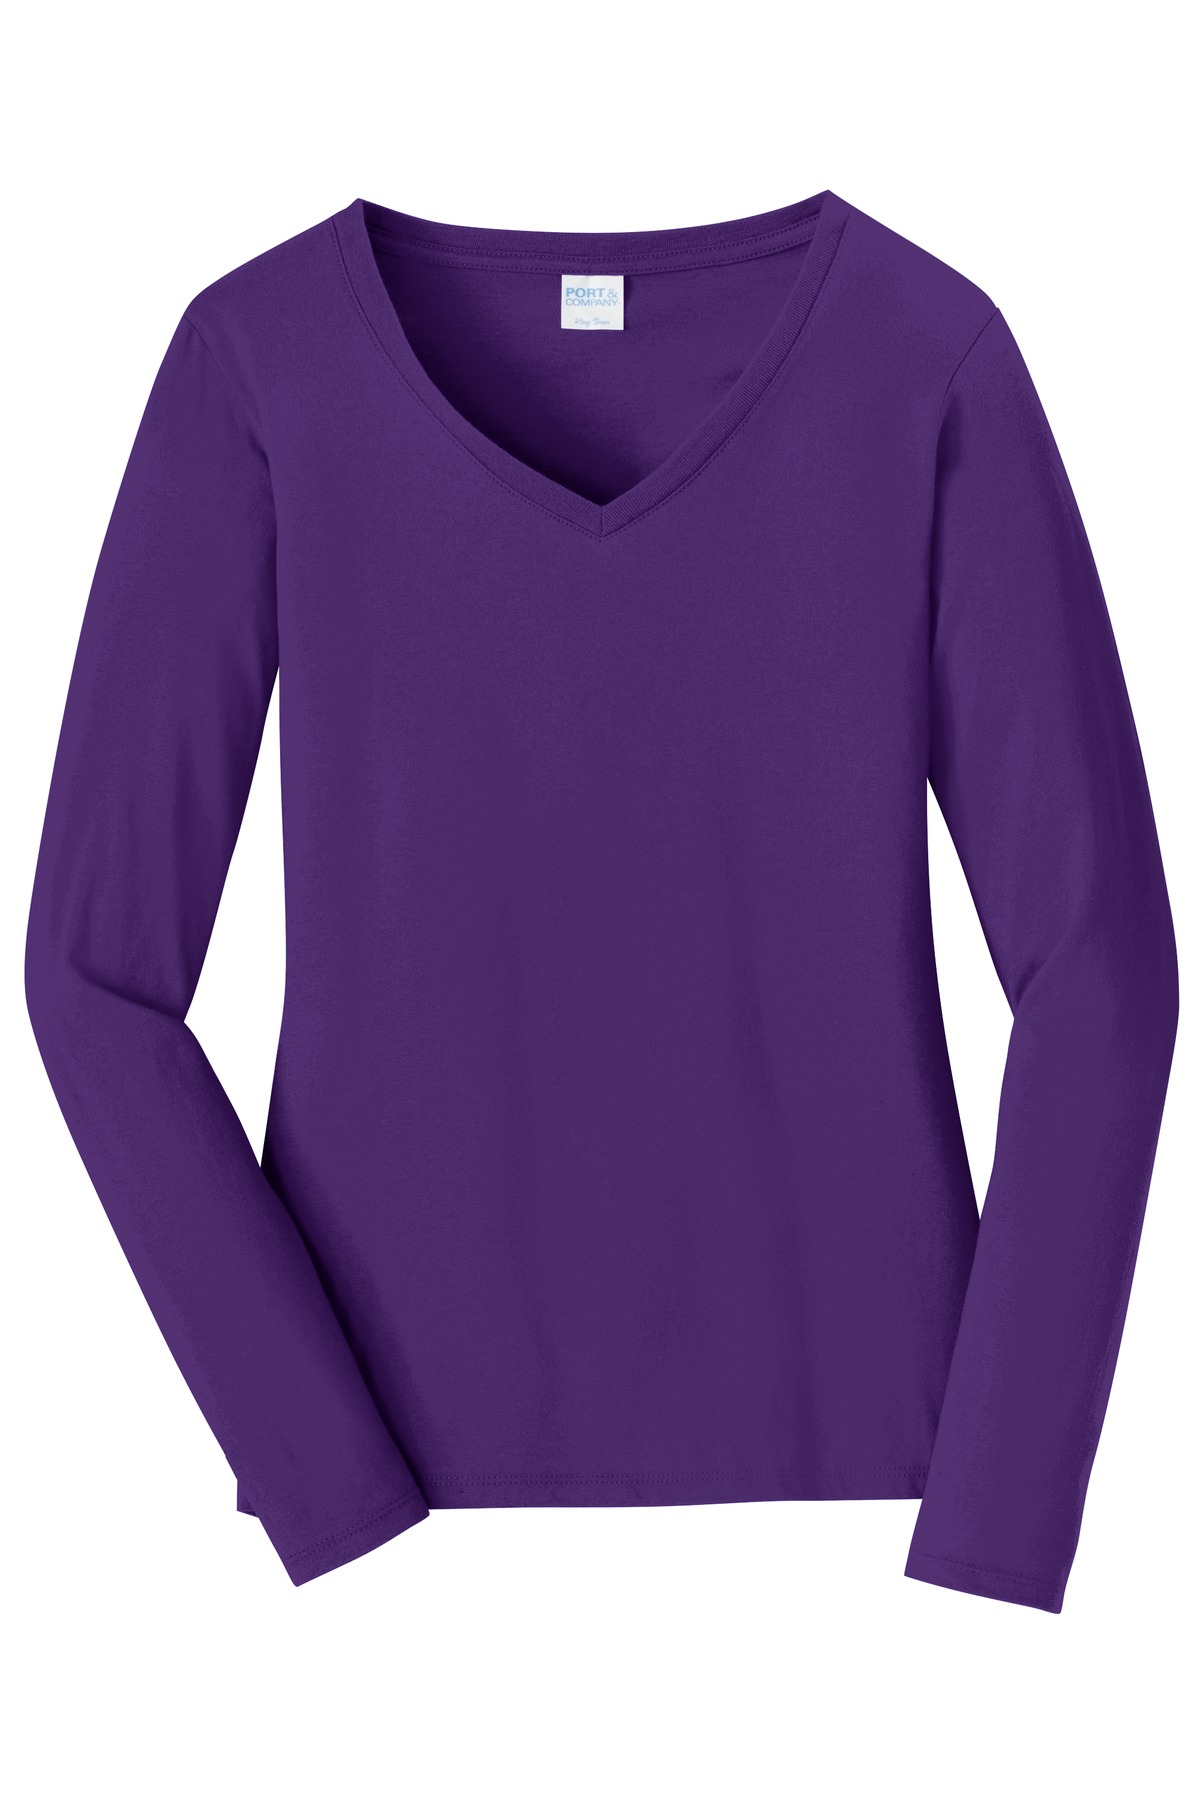 Port & Company Ladies Long Sleeve Fan Favorite V Neck Tee-4XL (Team Purple) - image 5 of 6